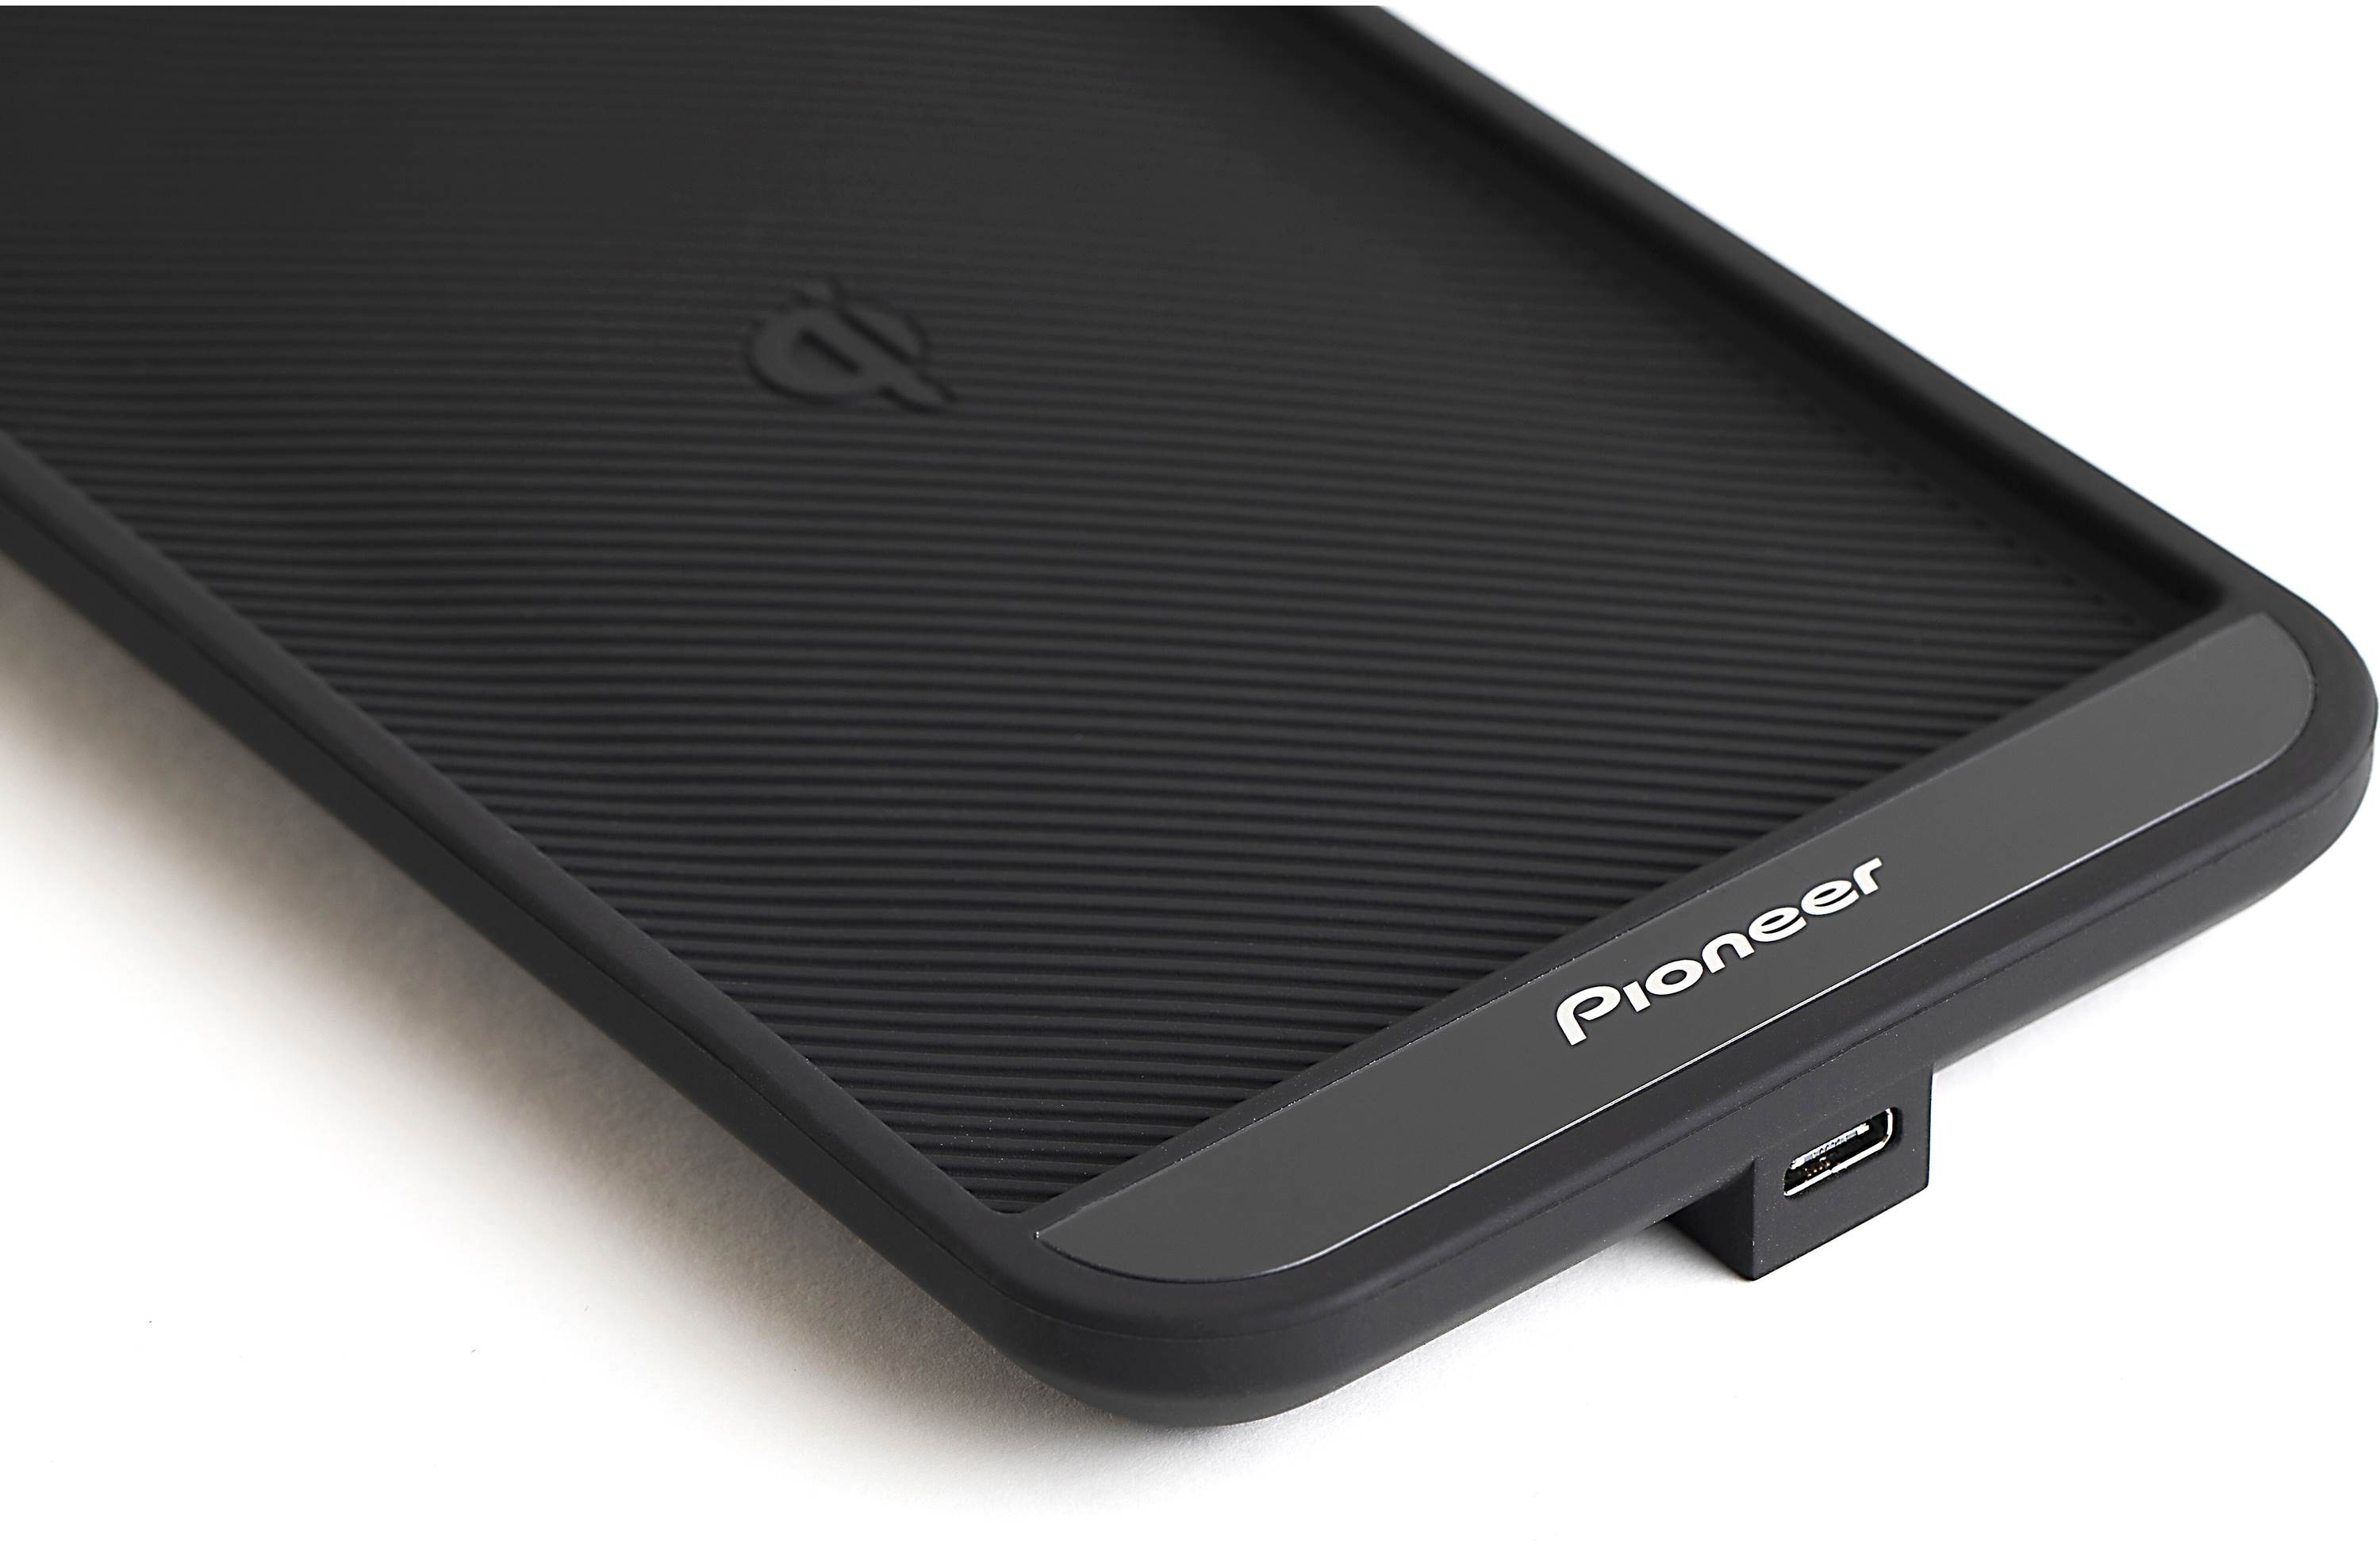 Pioneer SDA-CP300 Universal wireless Qi charging pad